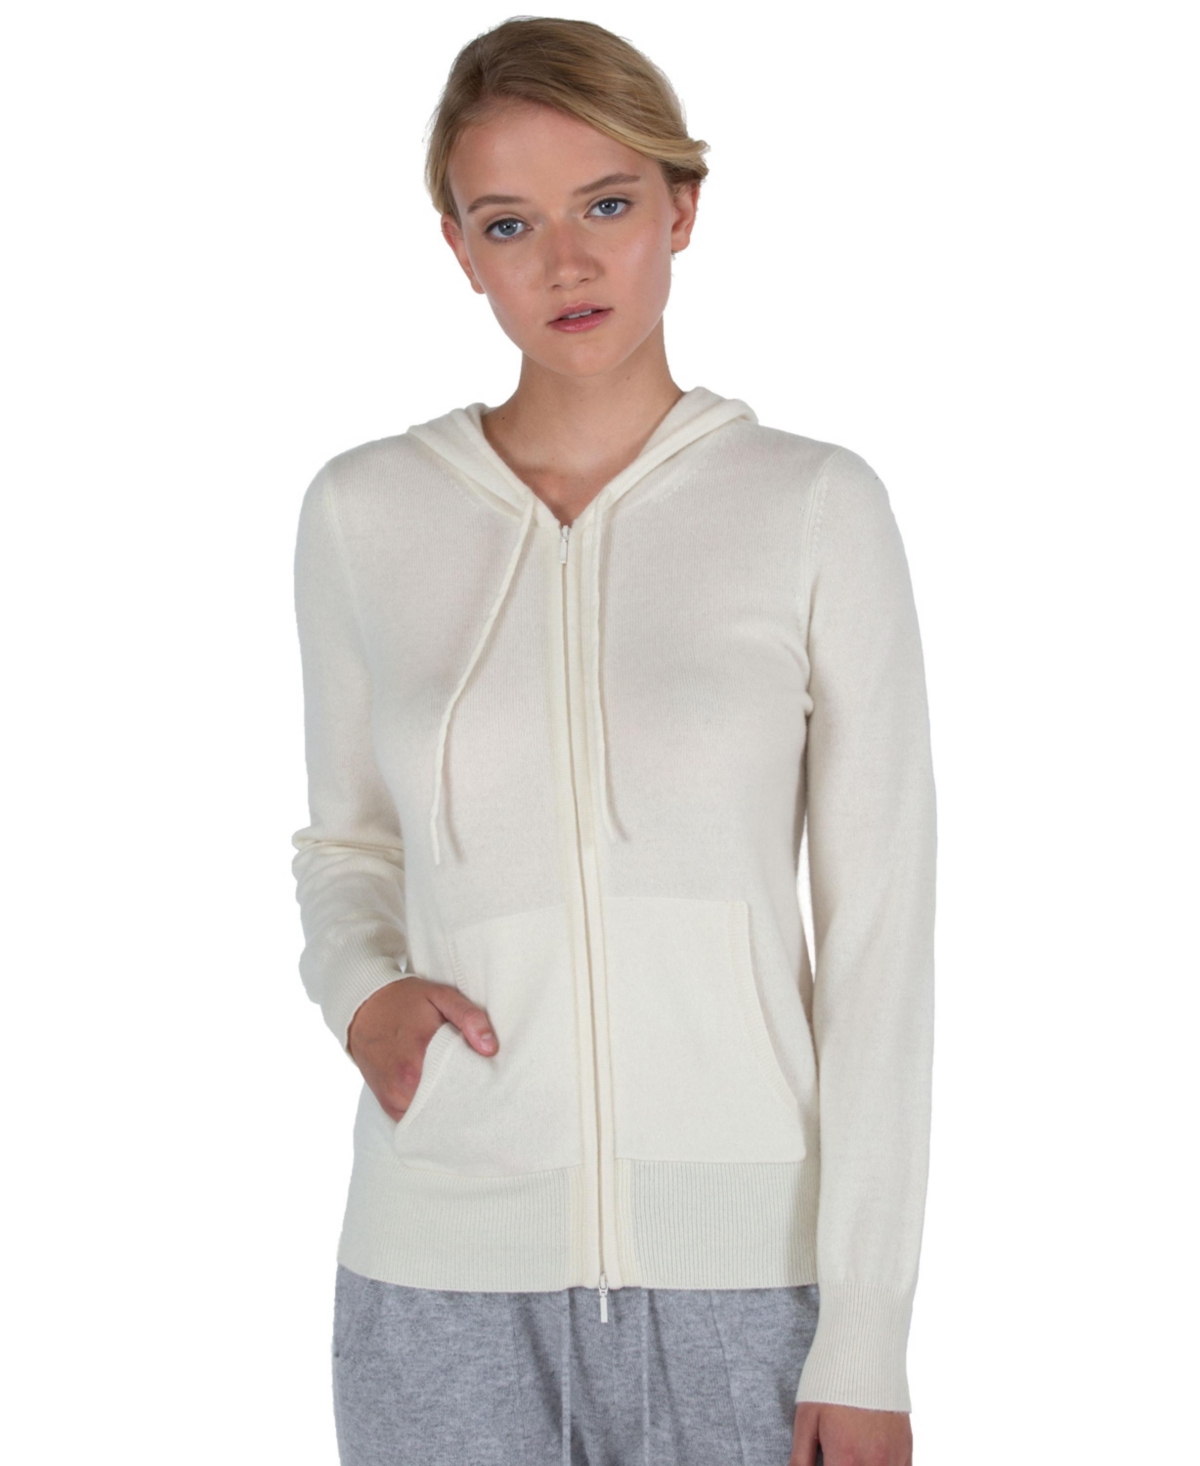 Women's 100% Pure Cashmere Long Sleeve Zip Hoodie Cardigan Sweater - Grey